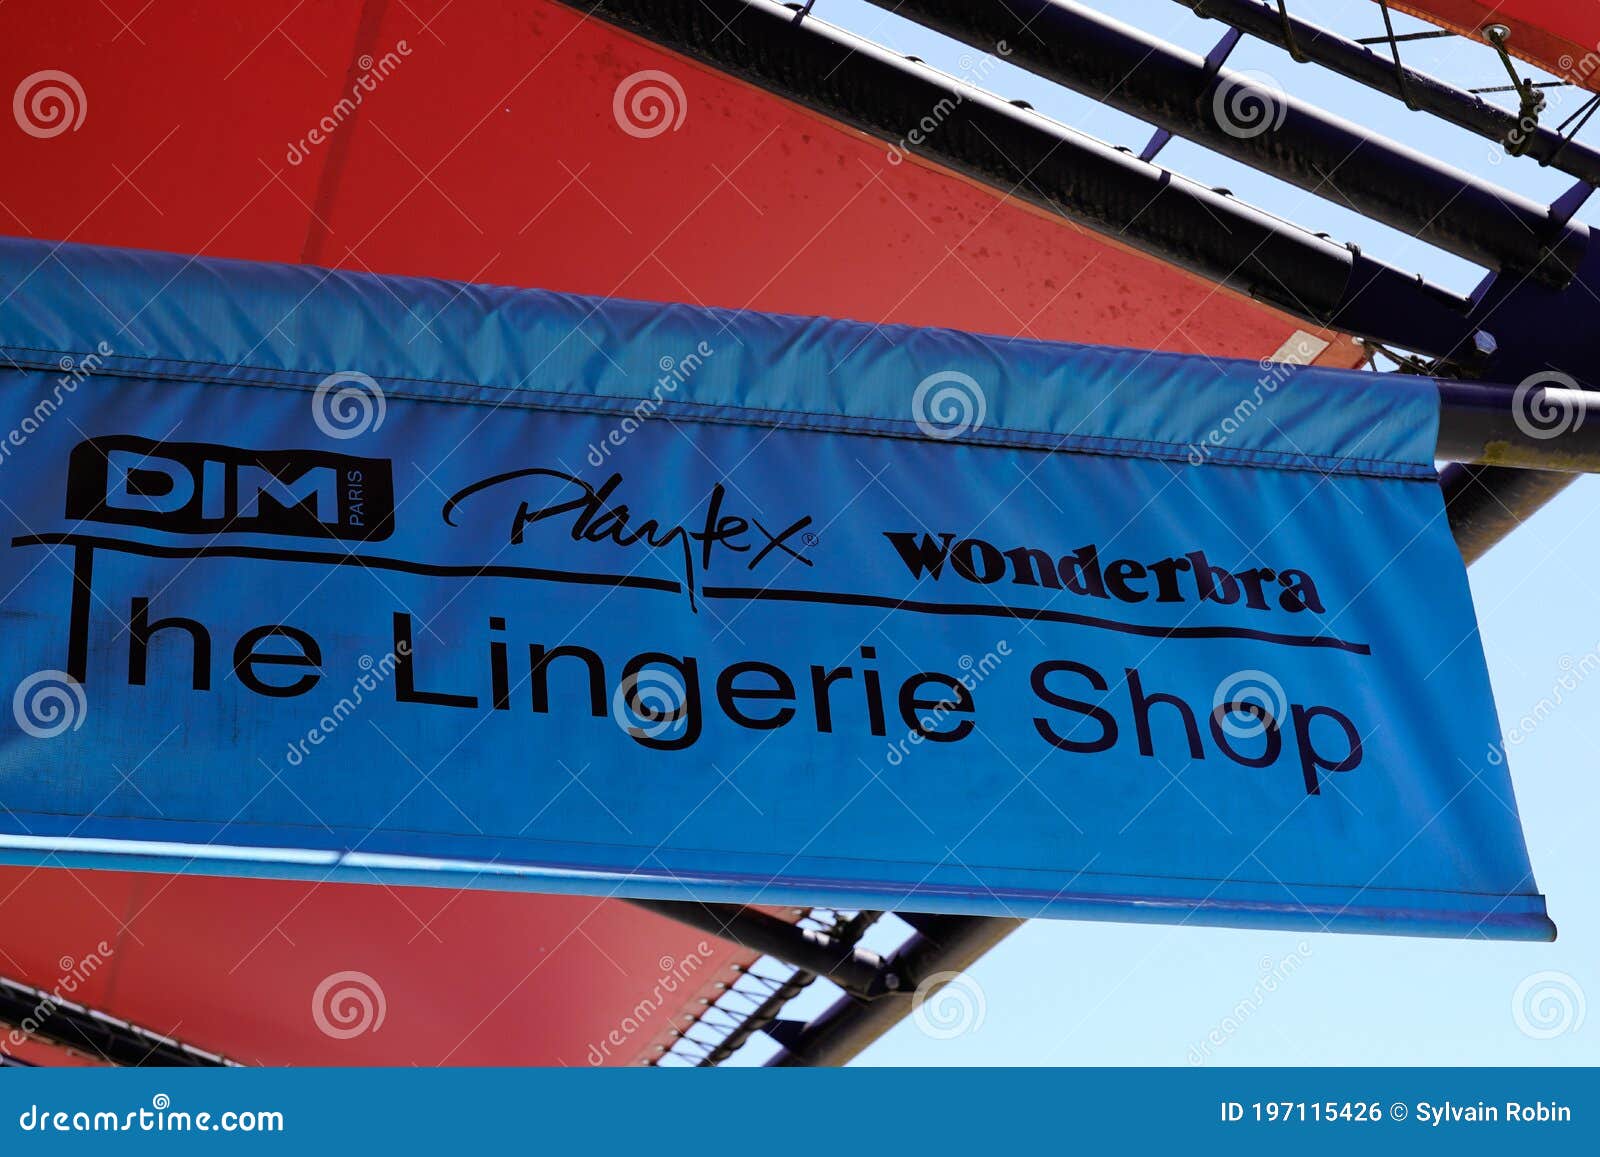 Dim Playtex Wonderbra Group Create the Lingerie Shop Sign Logo of